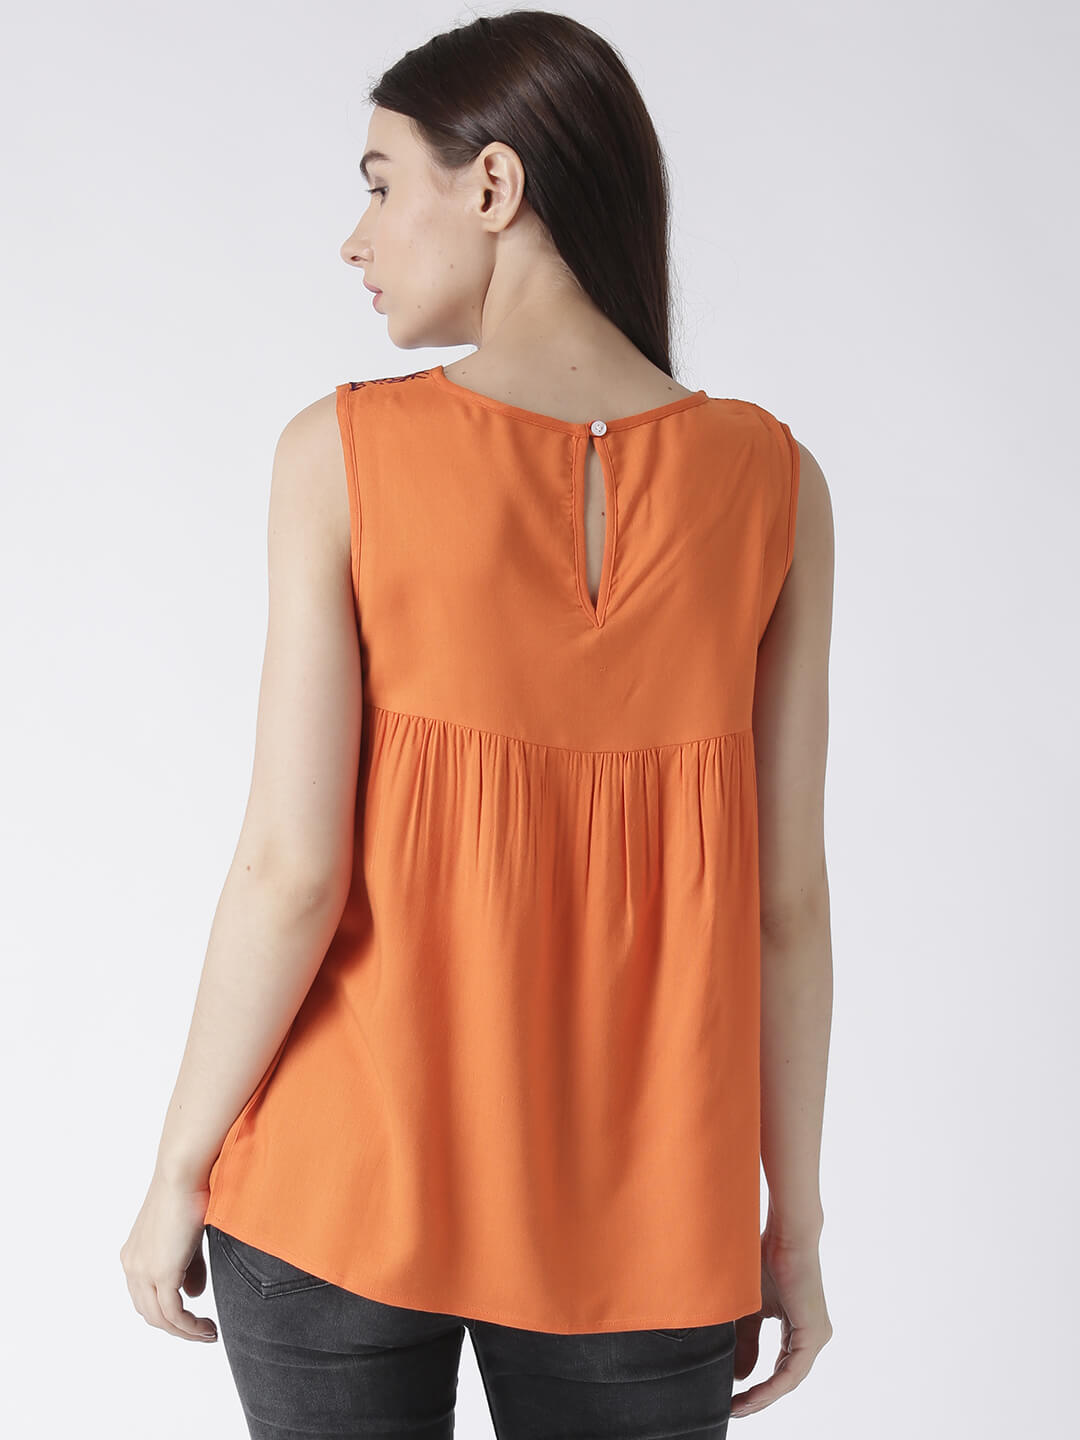 Women'S Sleeveless Orange Top With Embroidered Yoke